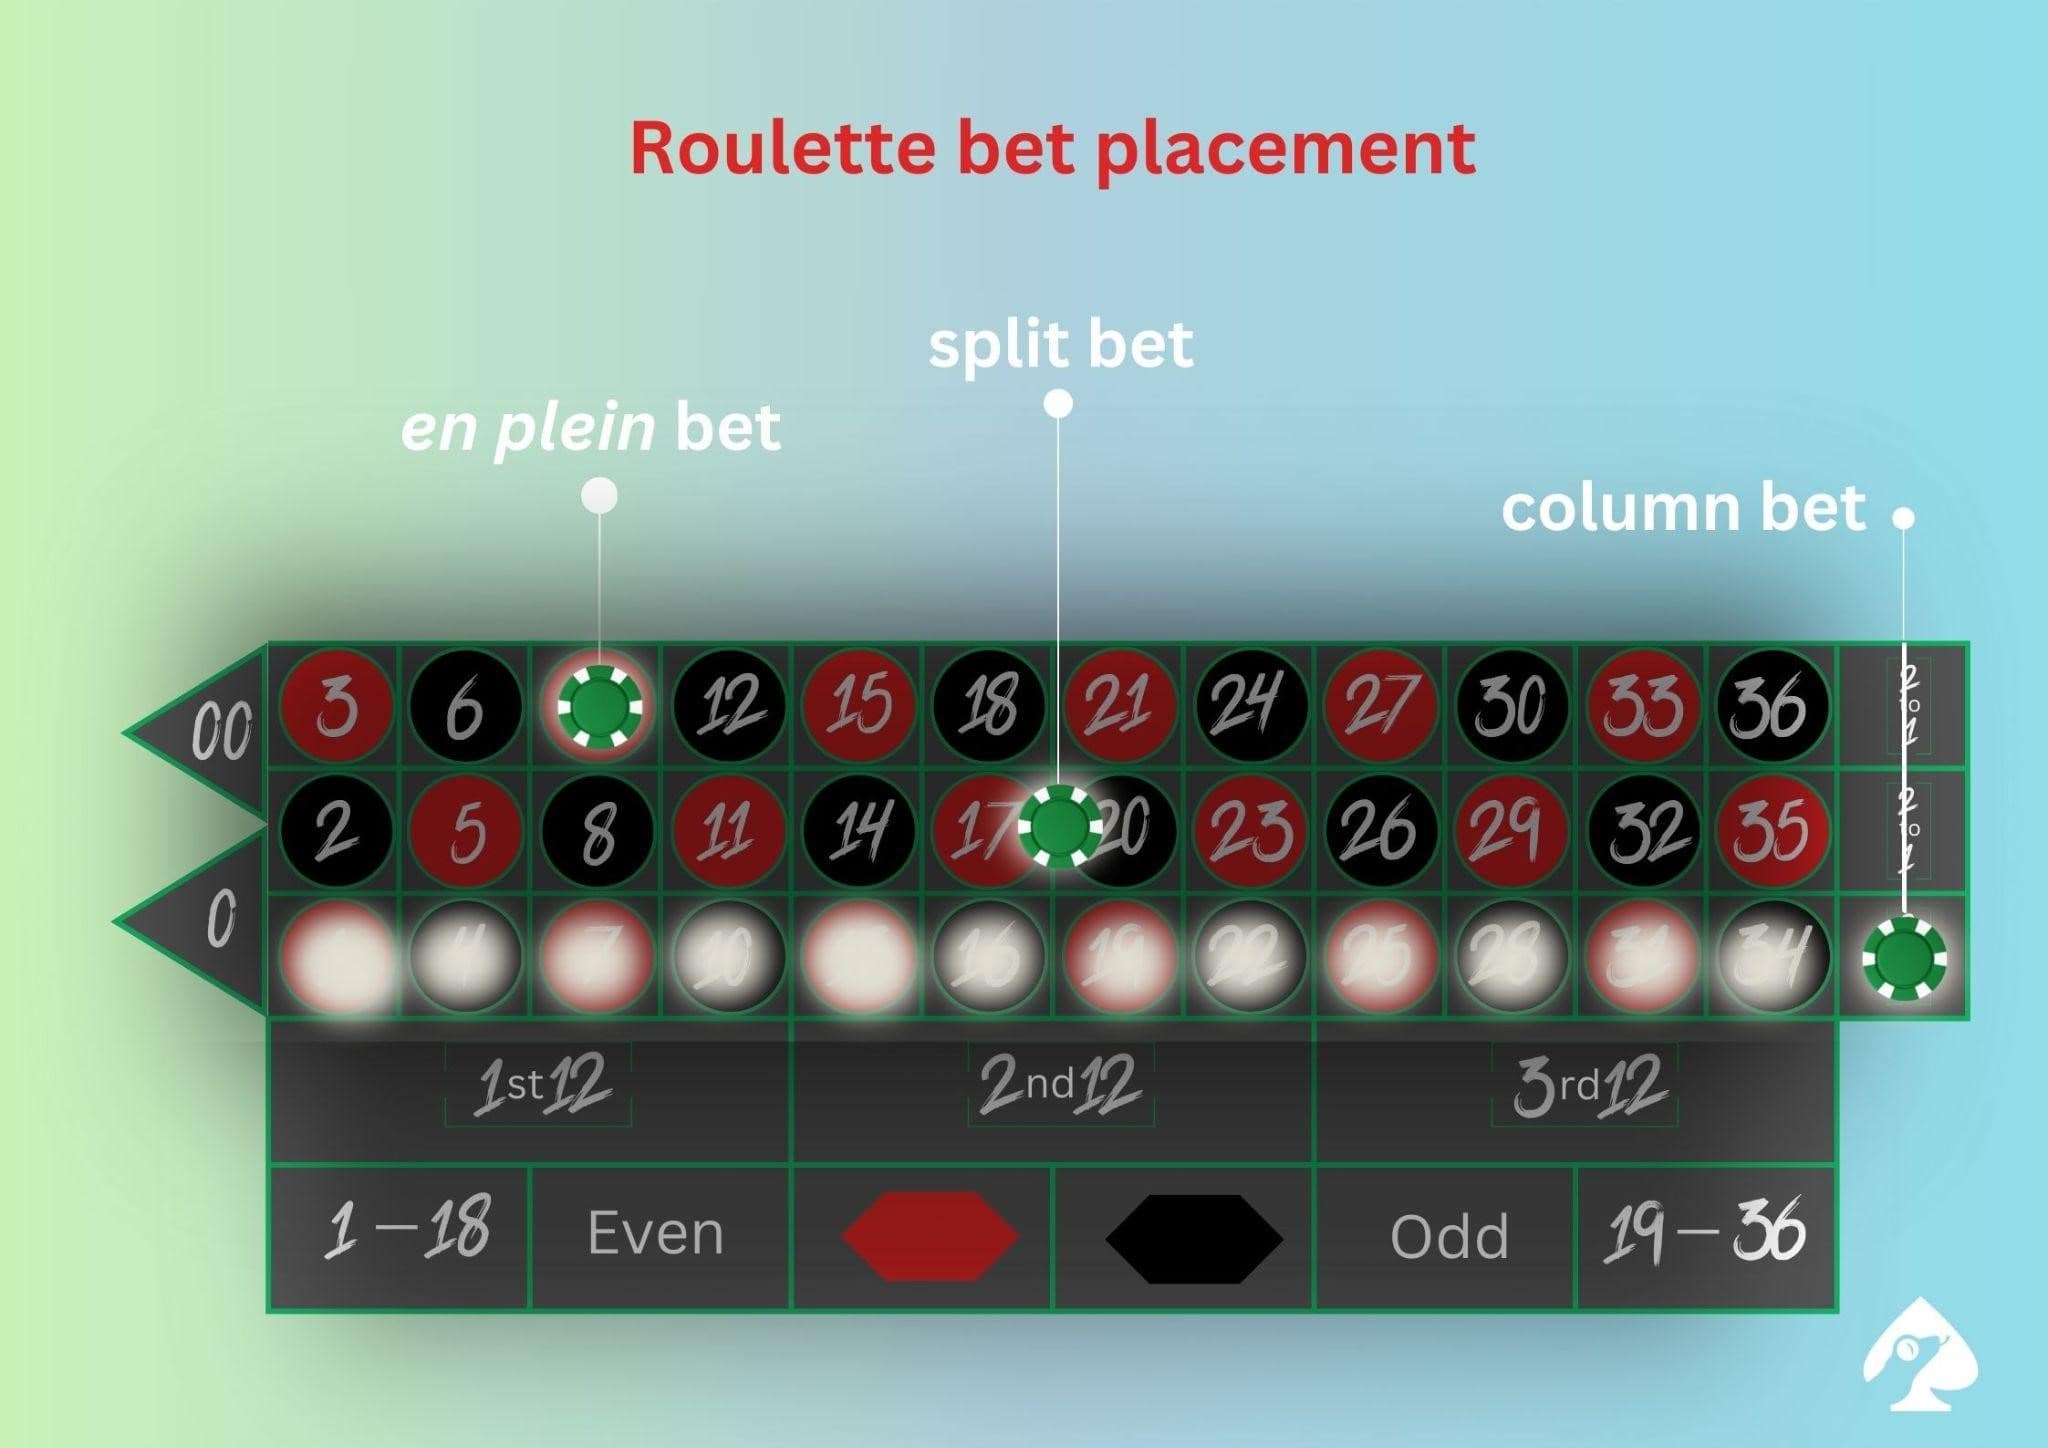 Roulette bets. Placement